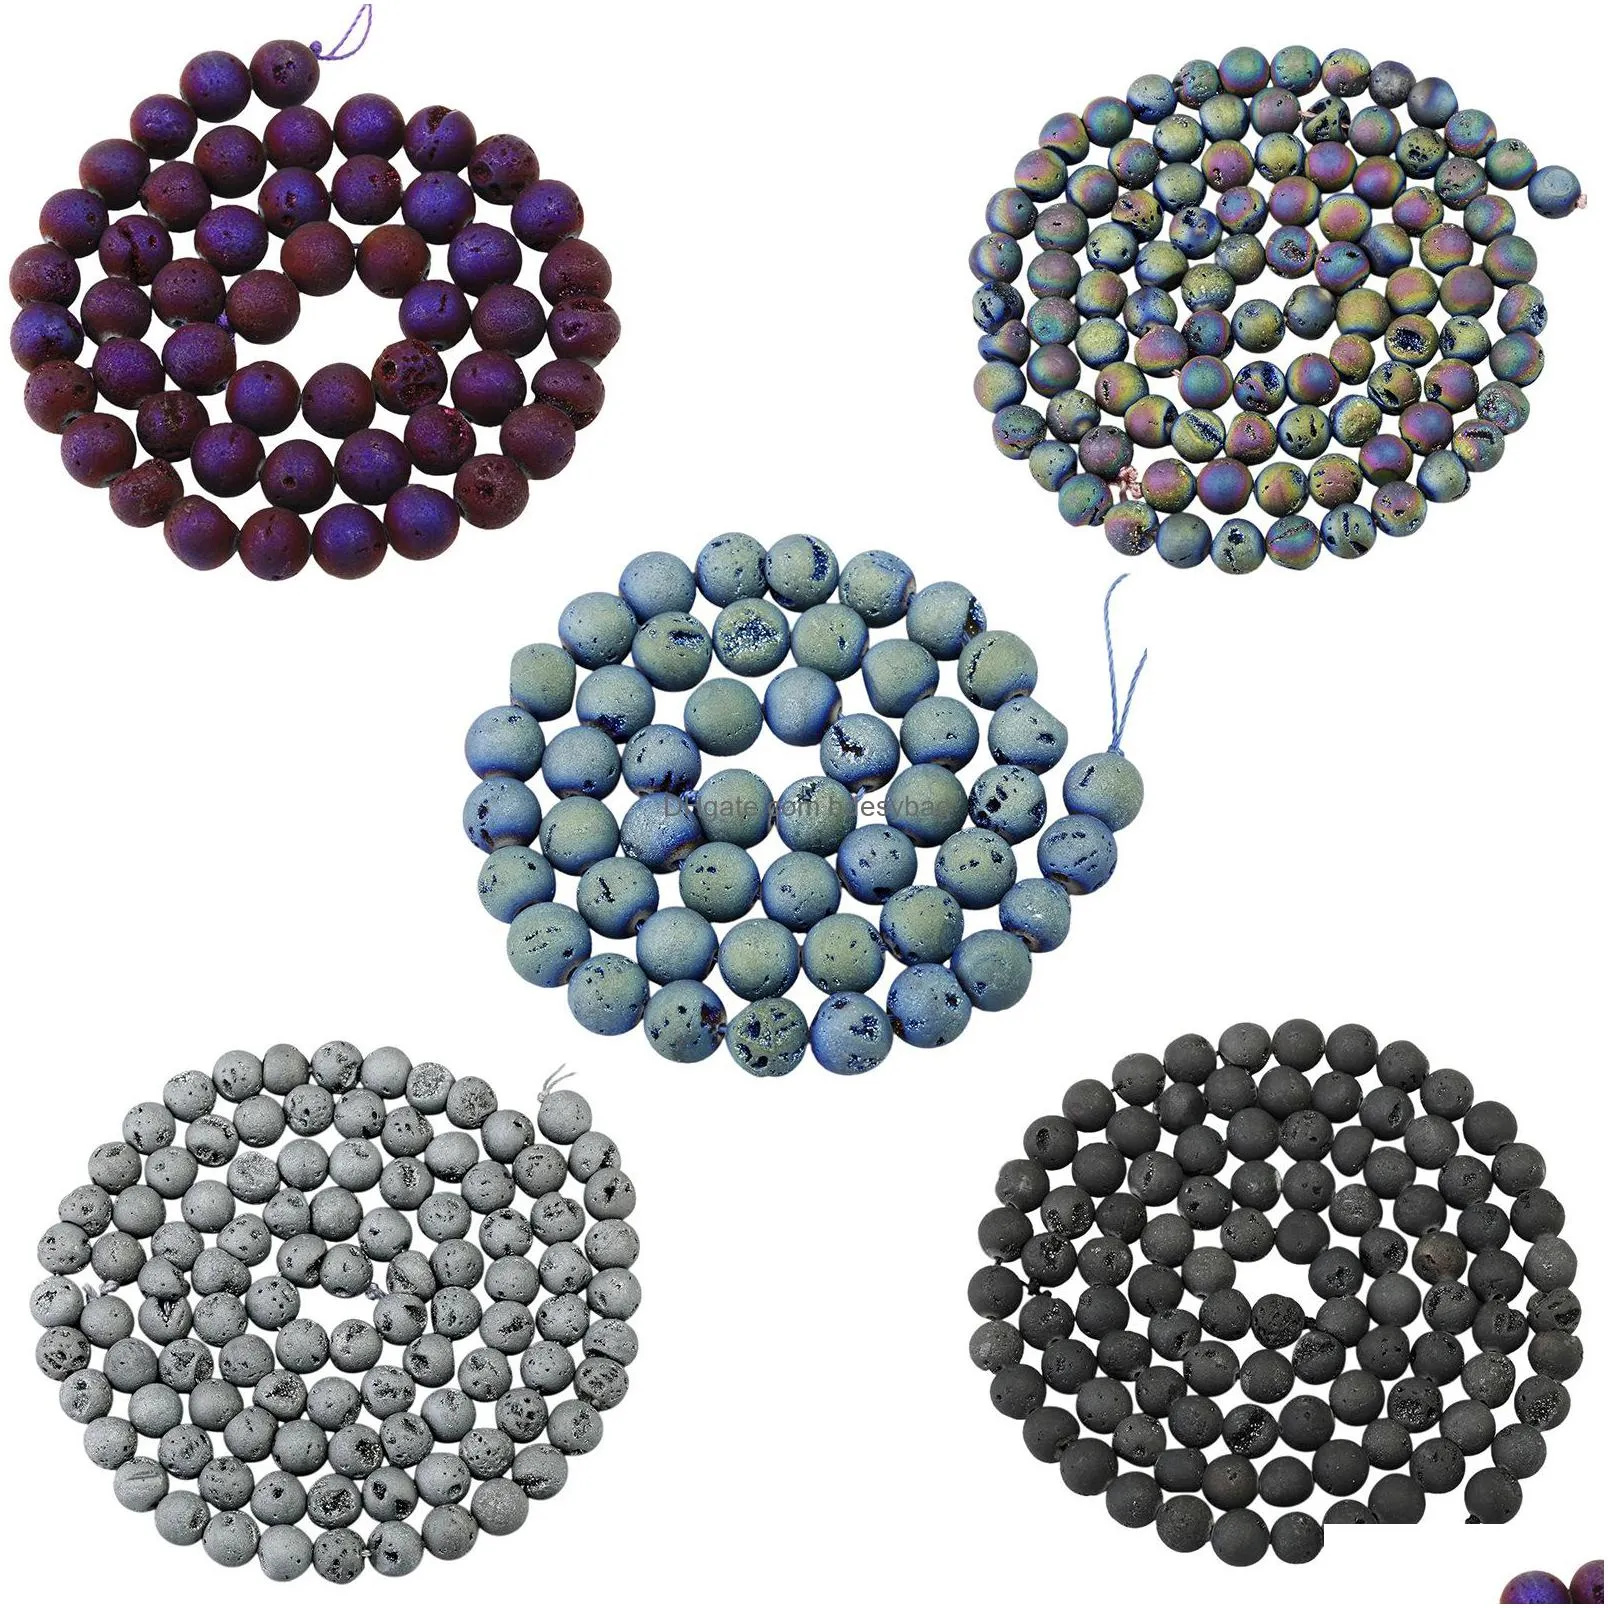 12mm druzy agate crystal round beads 32pcs dursy quartz organic gemstone spherical energy stone healing power for jewelry bracelet mala necklace making 1